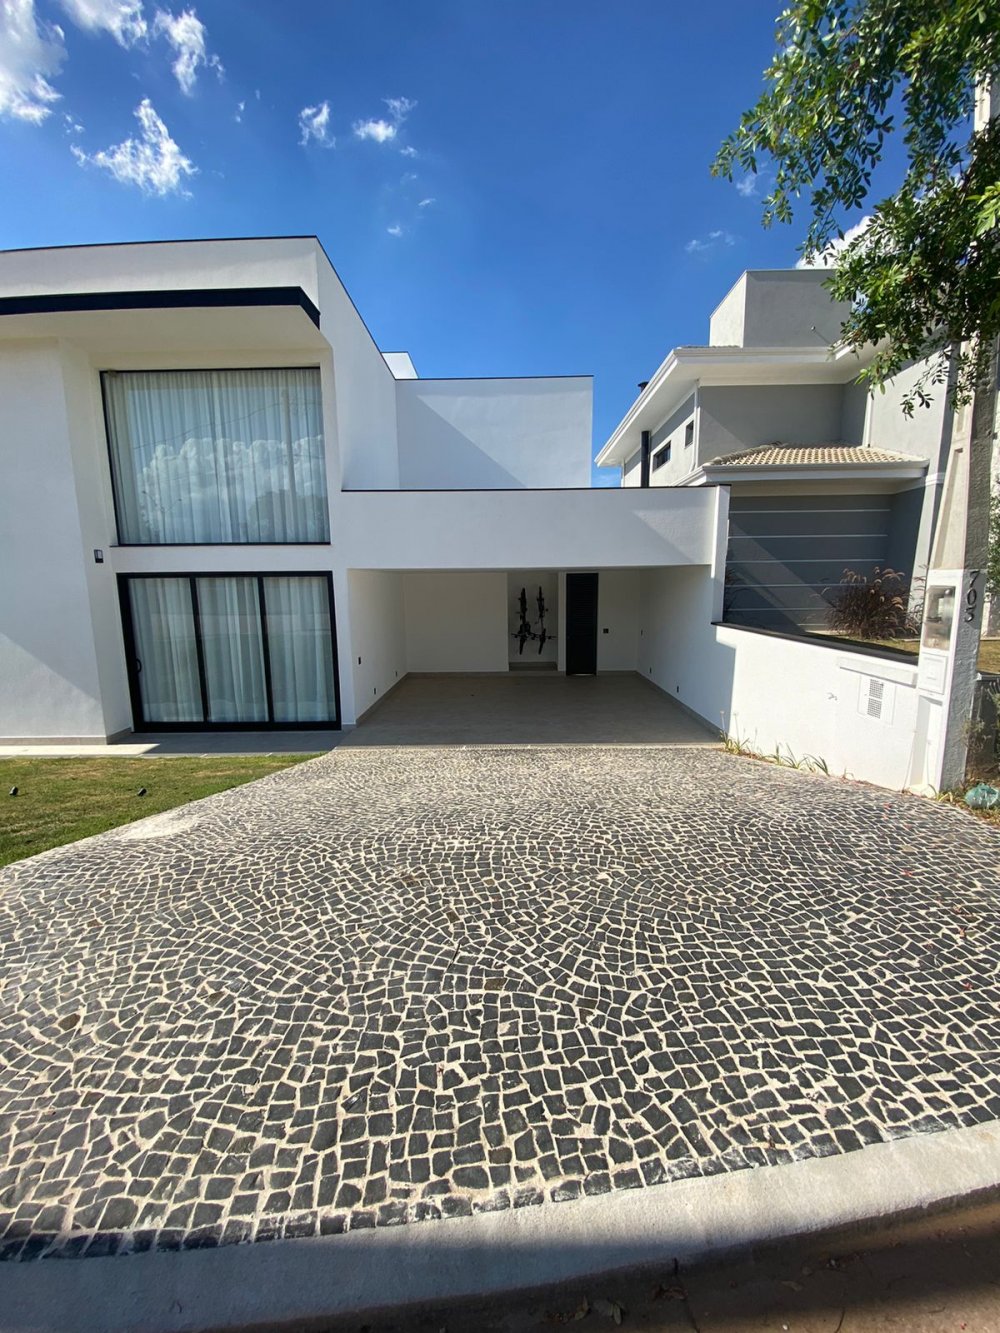 Casa em condomnio  venda  no Bairro da Posse - Itatiba, SP. Imveis